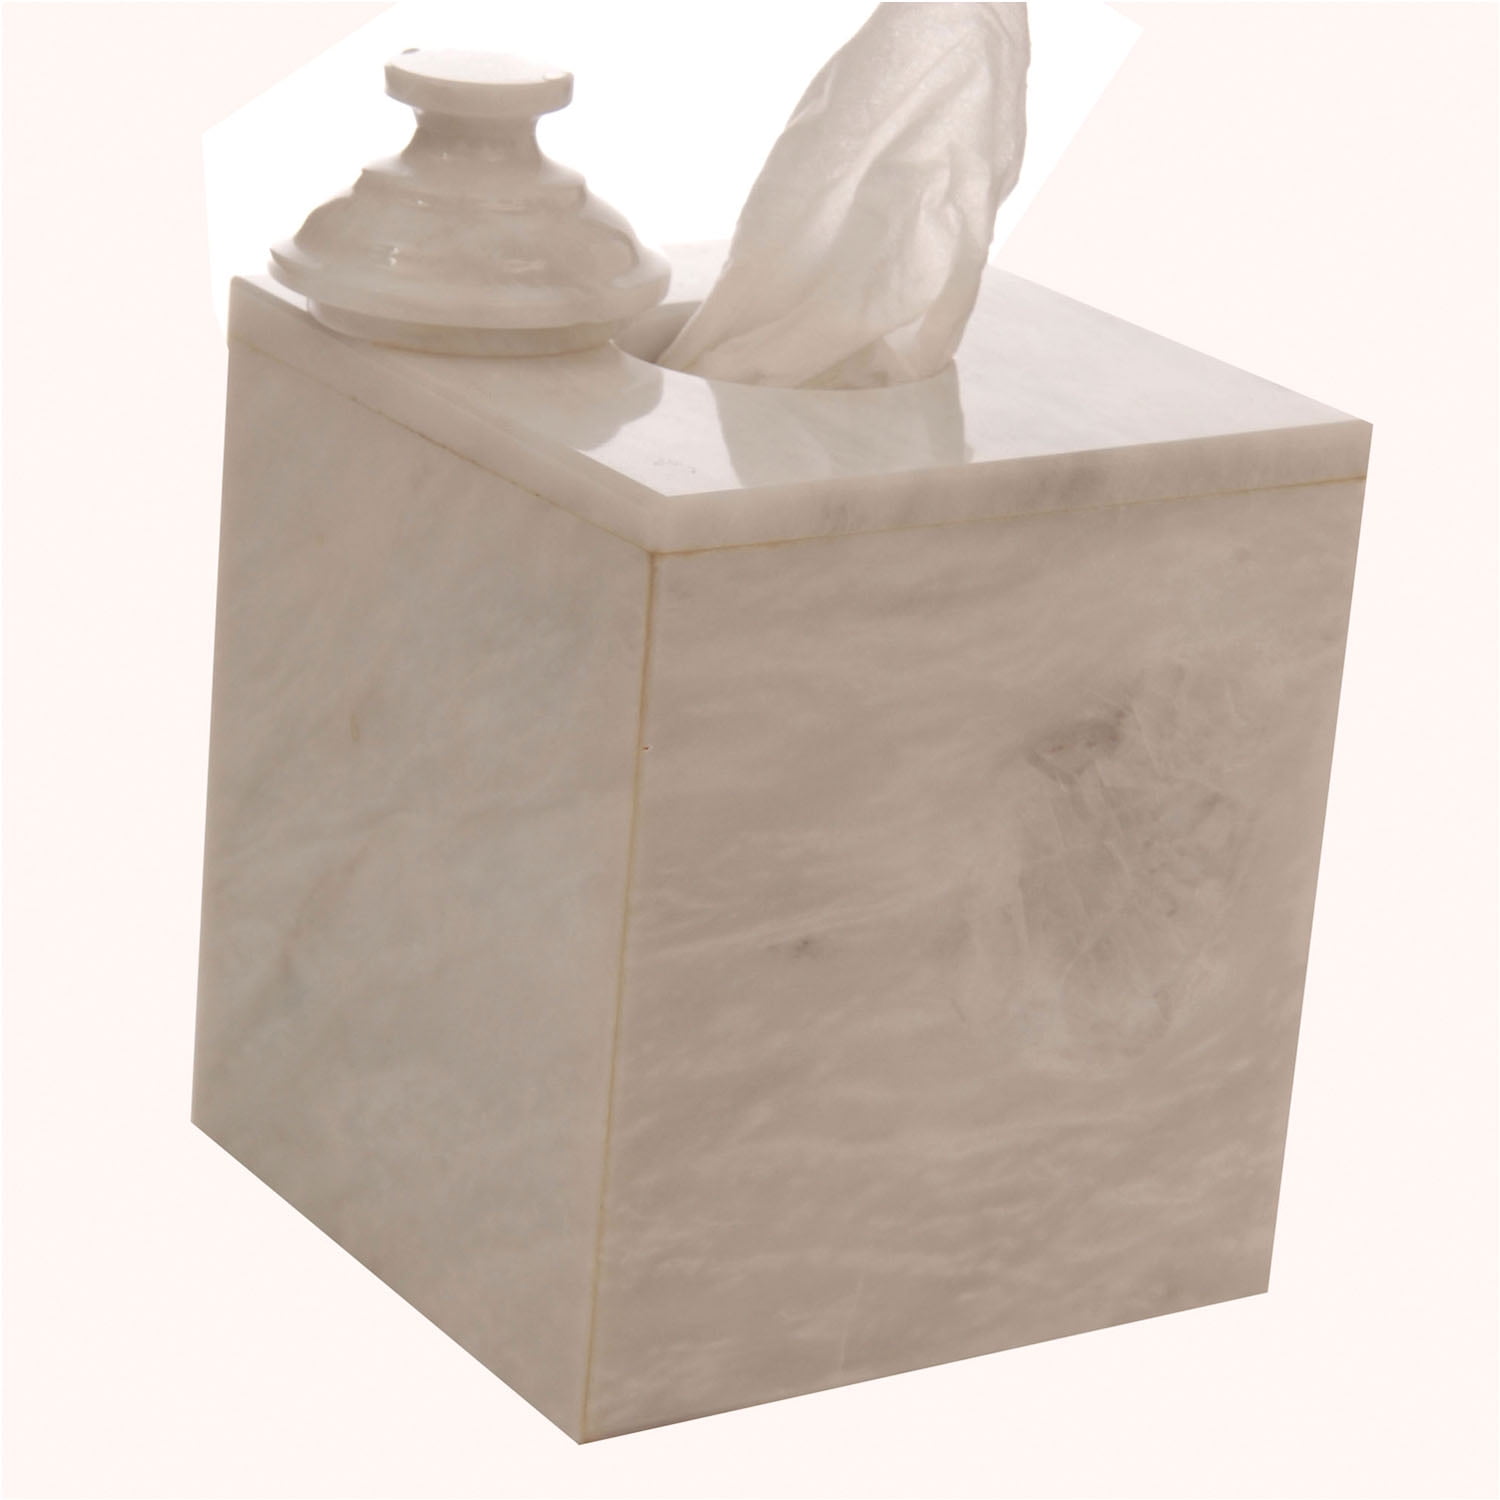 Rembrandt Home Alabaster White Tissue Box Cover